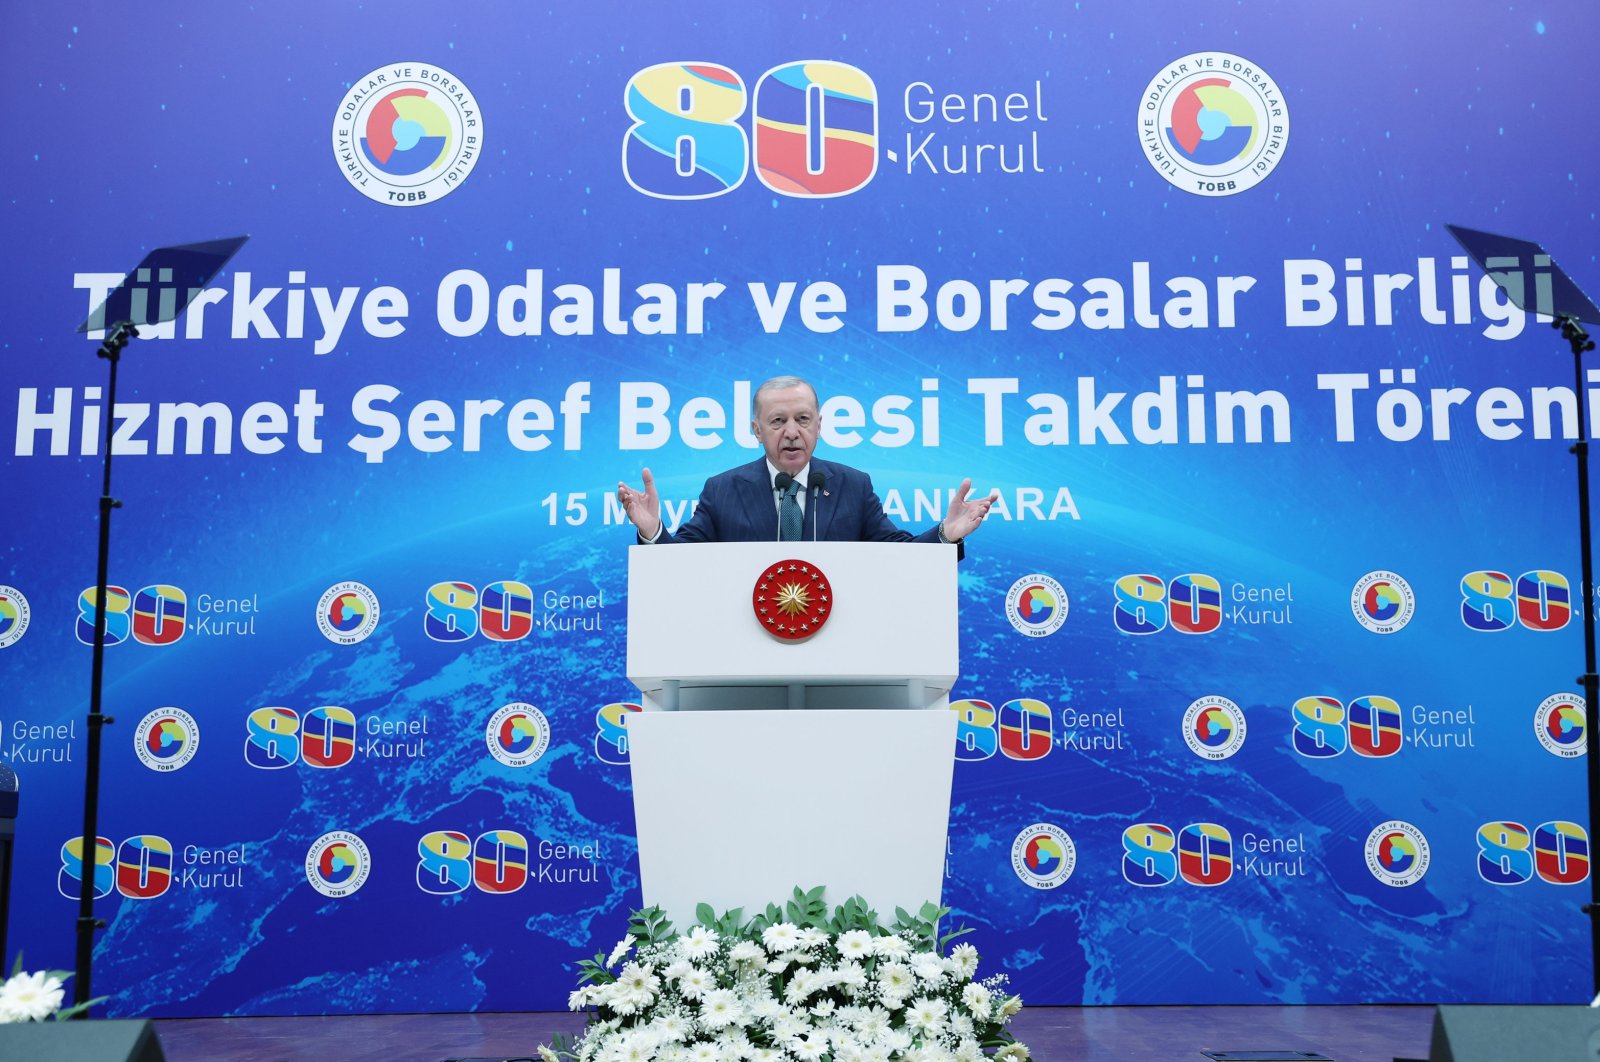 Türkiye to bolster monetary policy with fiscal discipline: Erdoğan